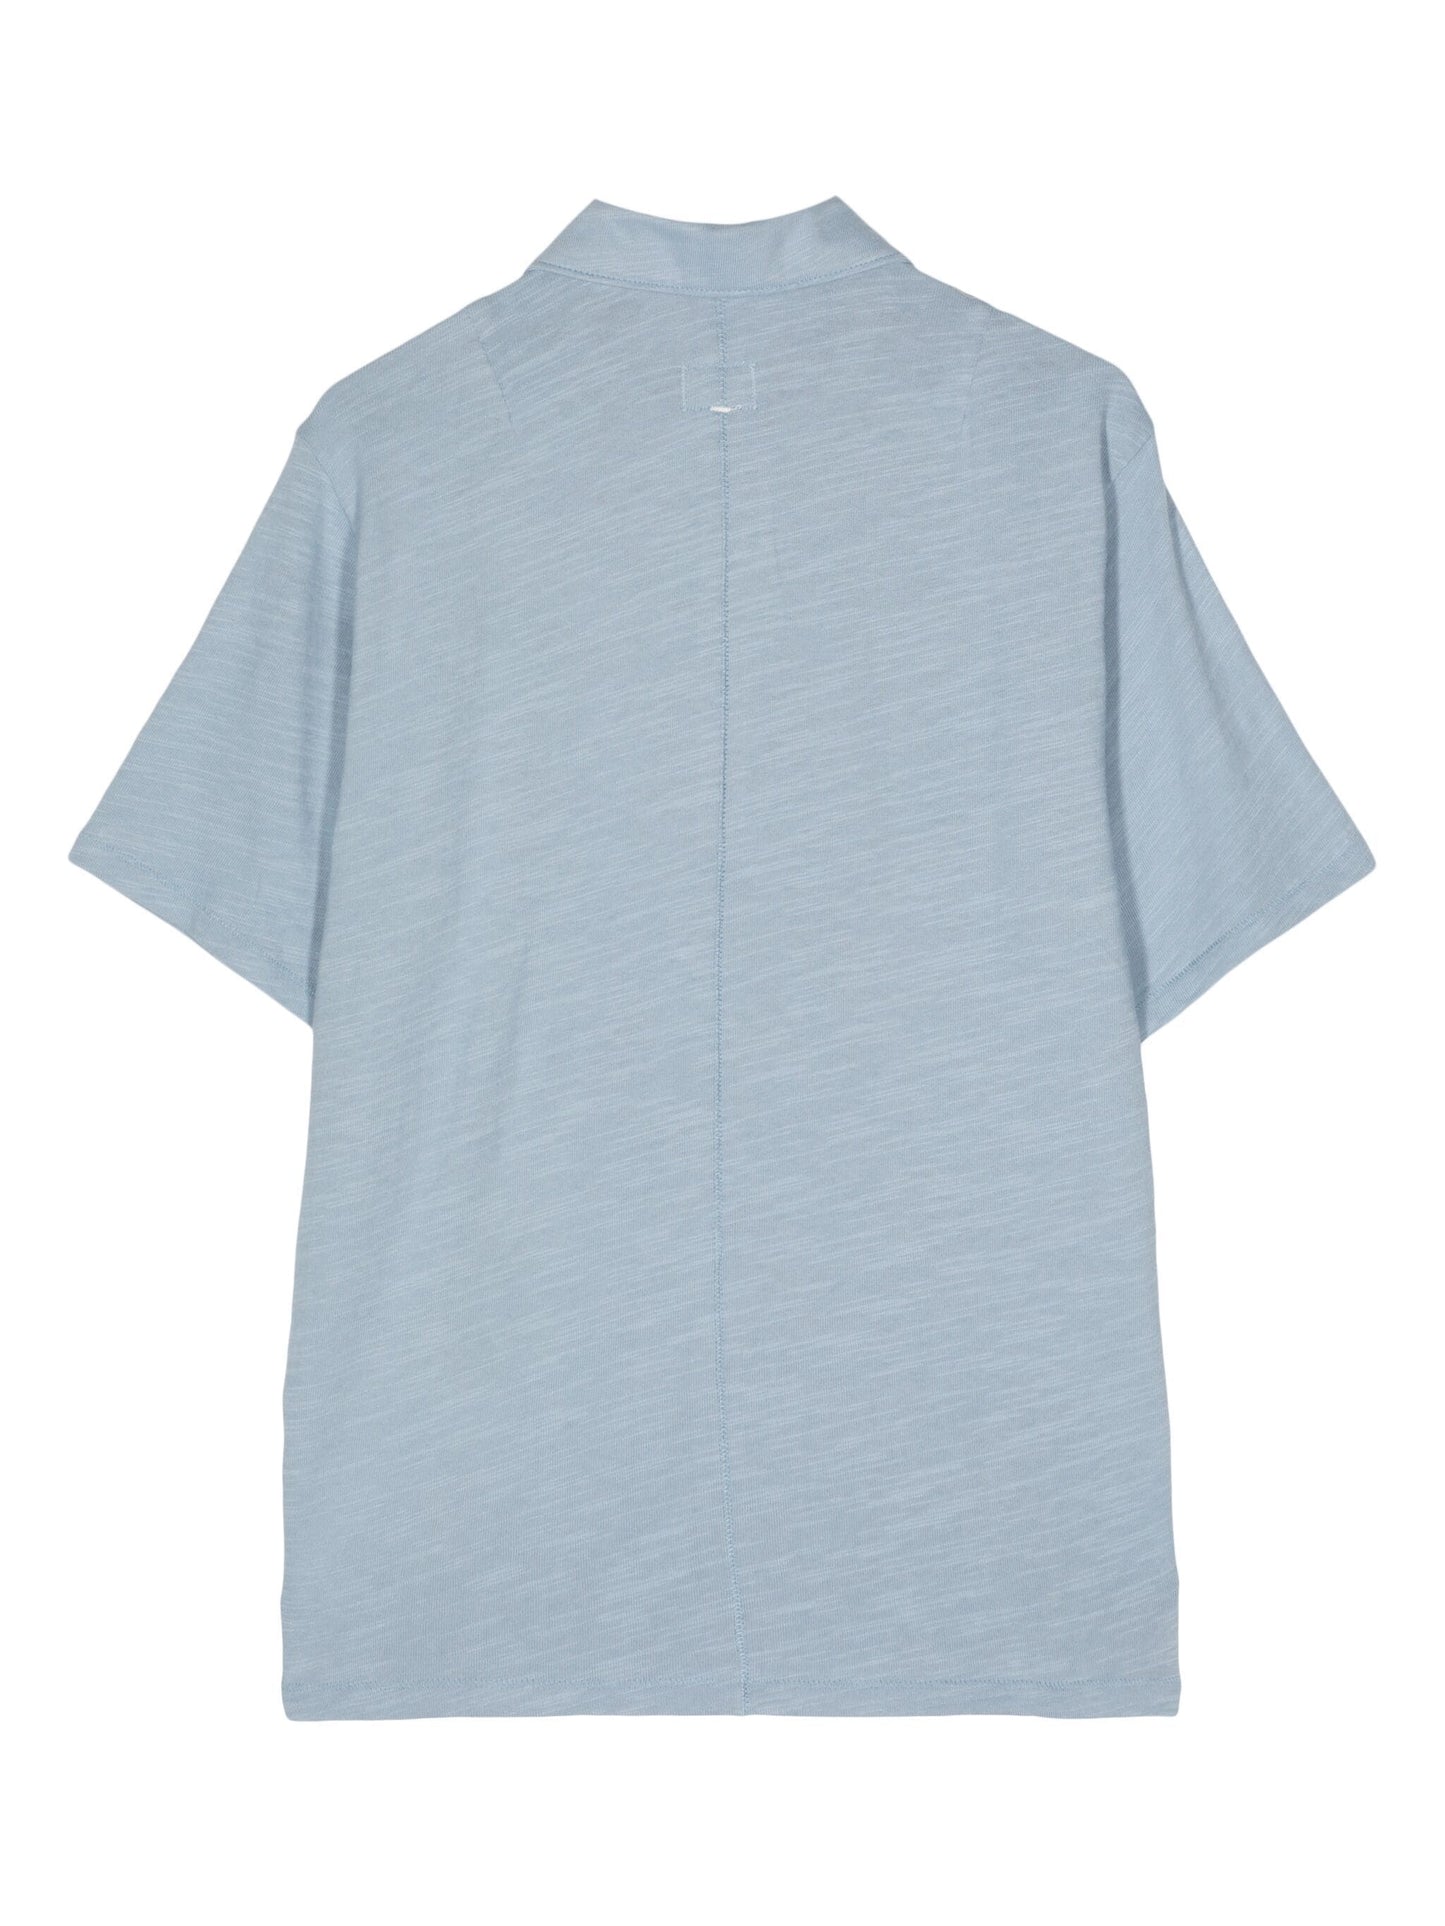 Rag & Bone Men's Classic Flame Polo Shirt, Desert Blue